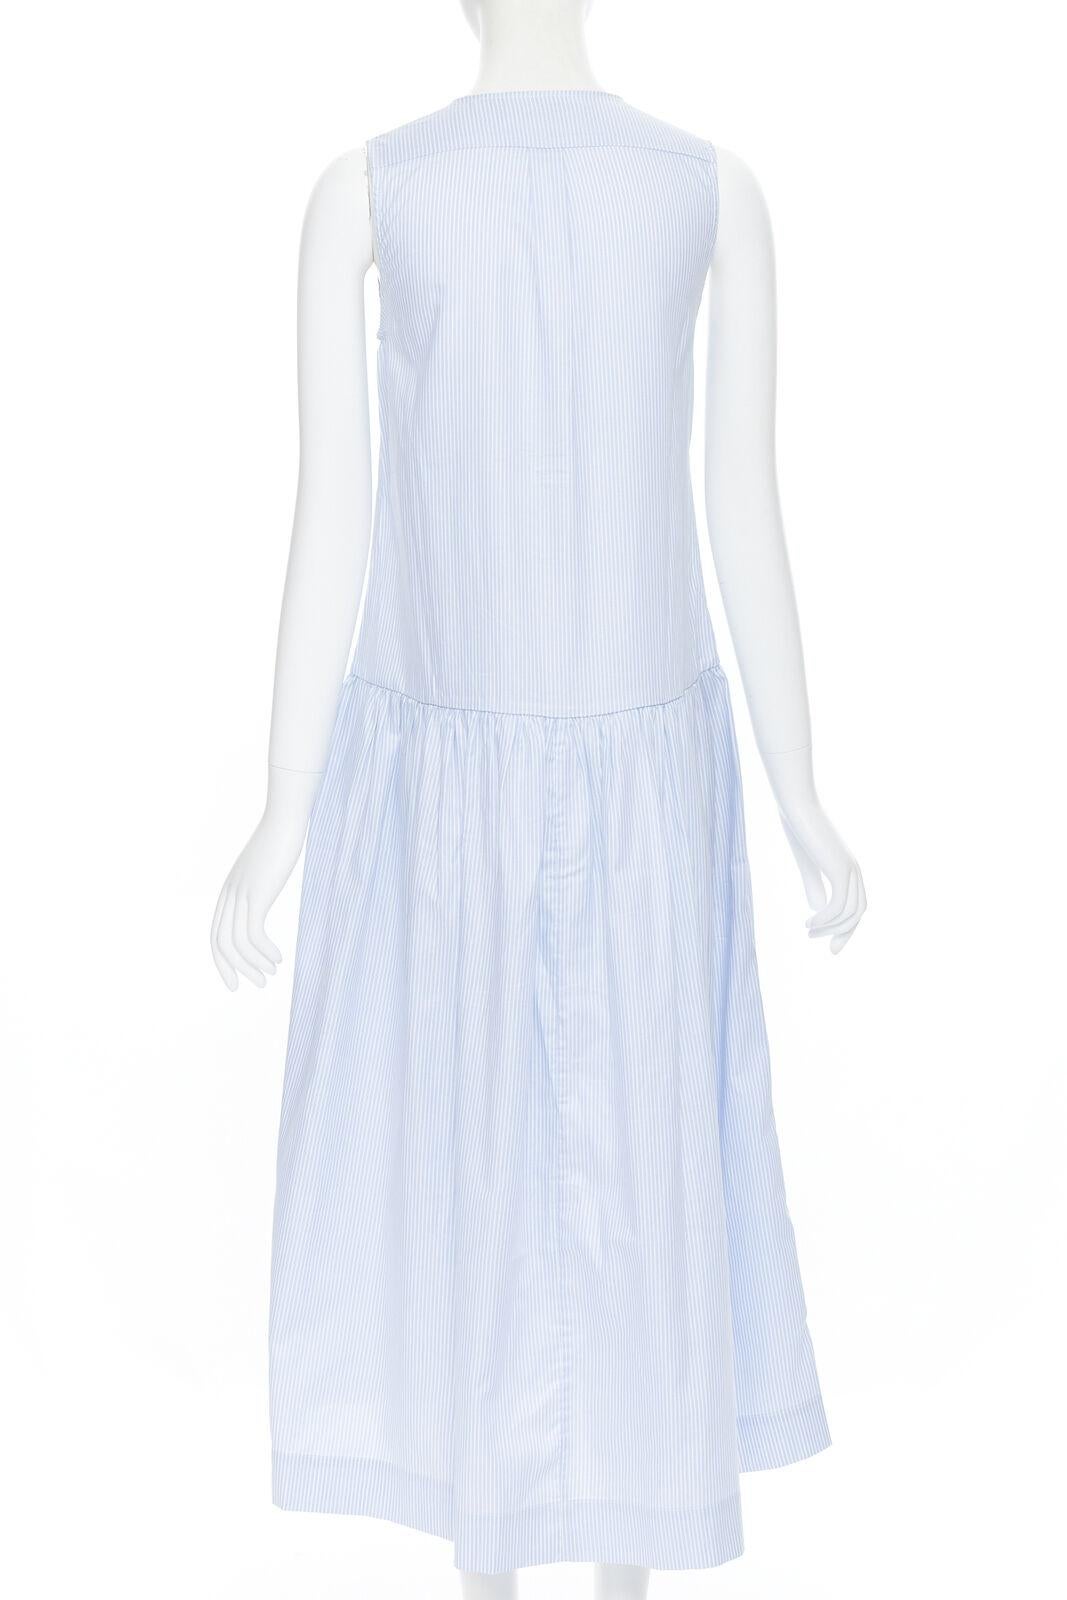 PALMER HARDING 100% cotton white bib front blue striped summer dress UK8 XS For Sale 2